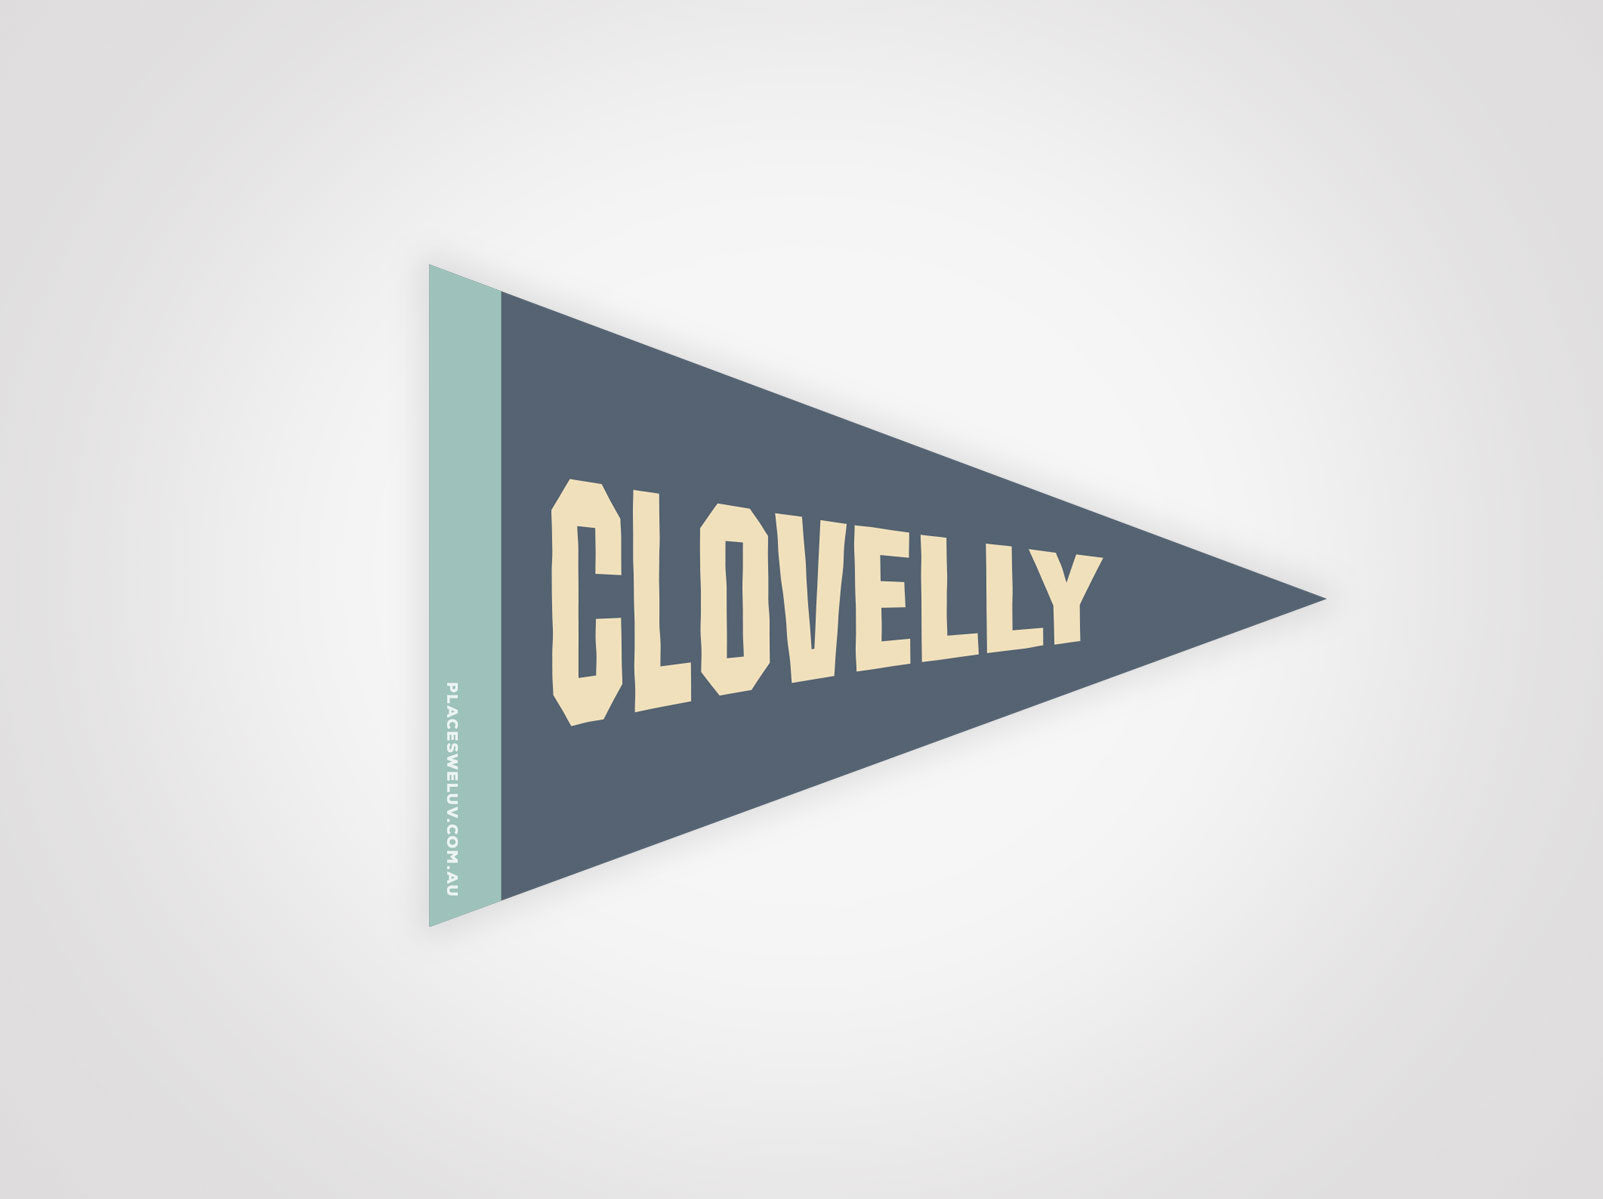 Clovelly travel flag decal